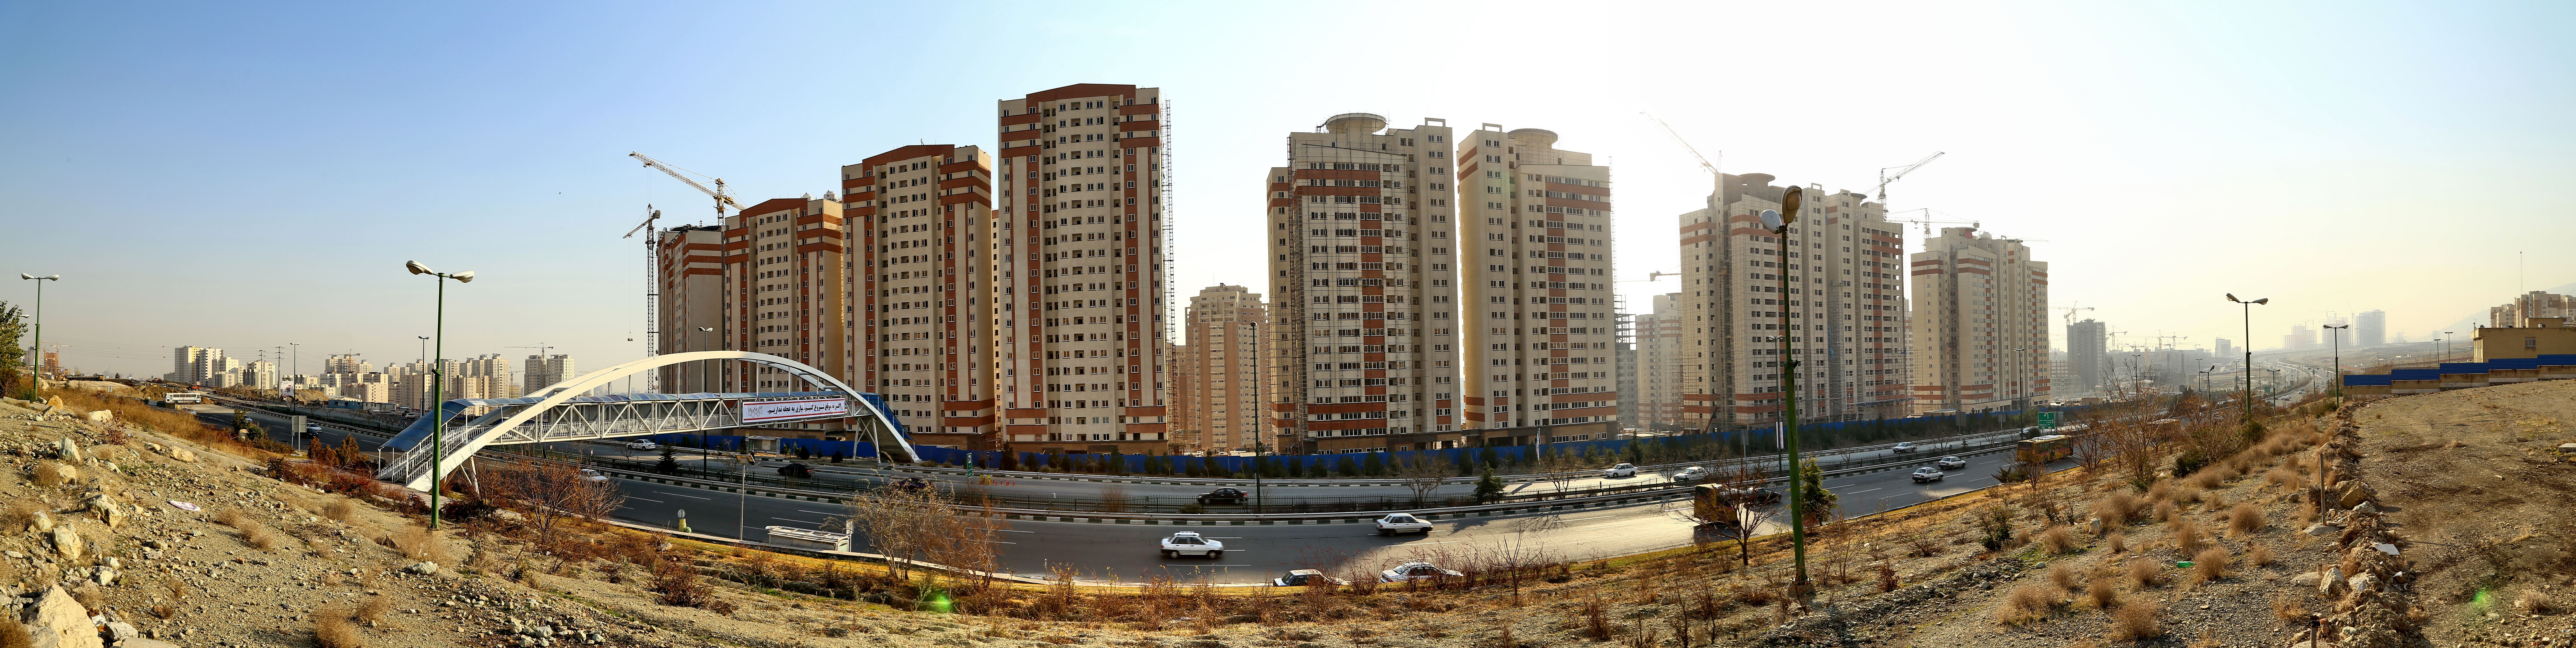 Asman residential complex